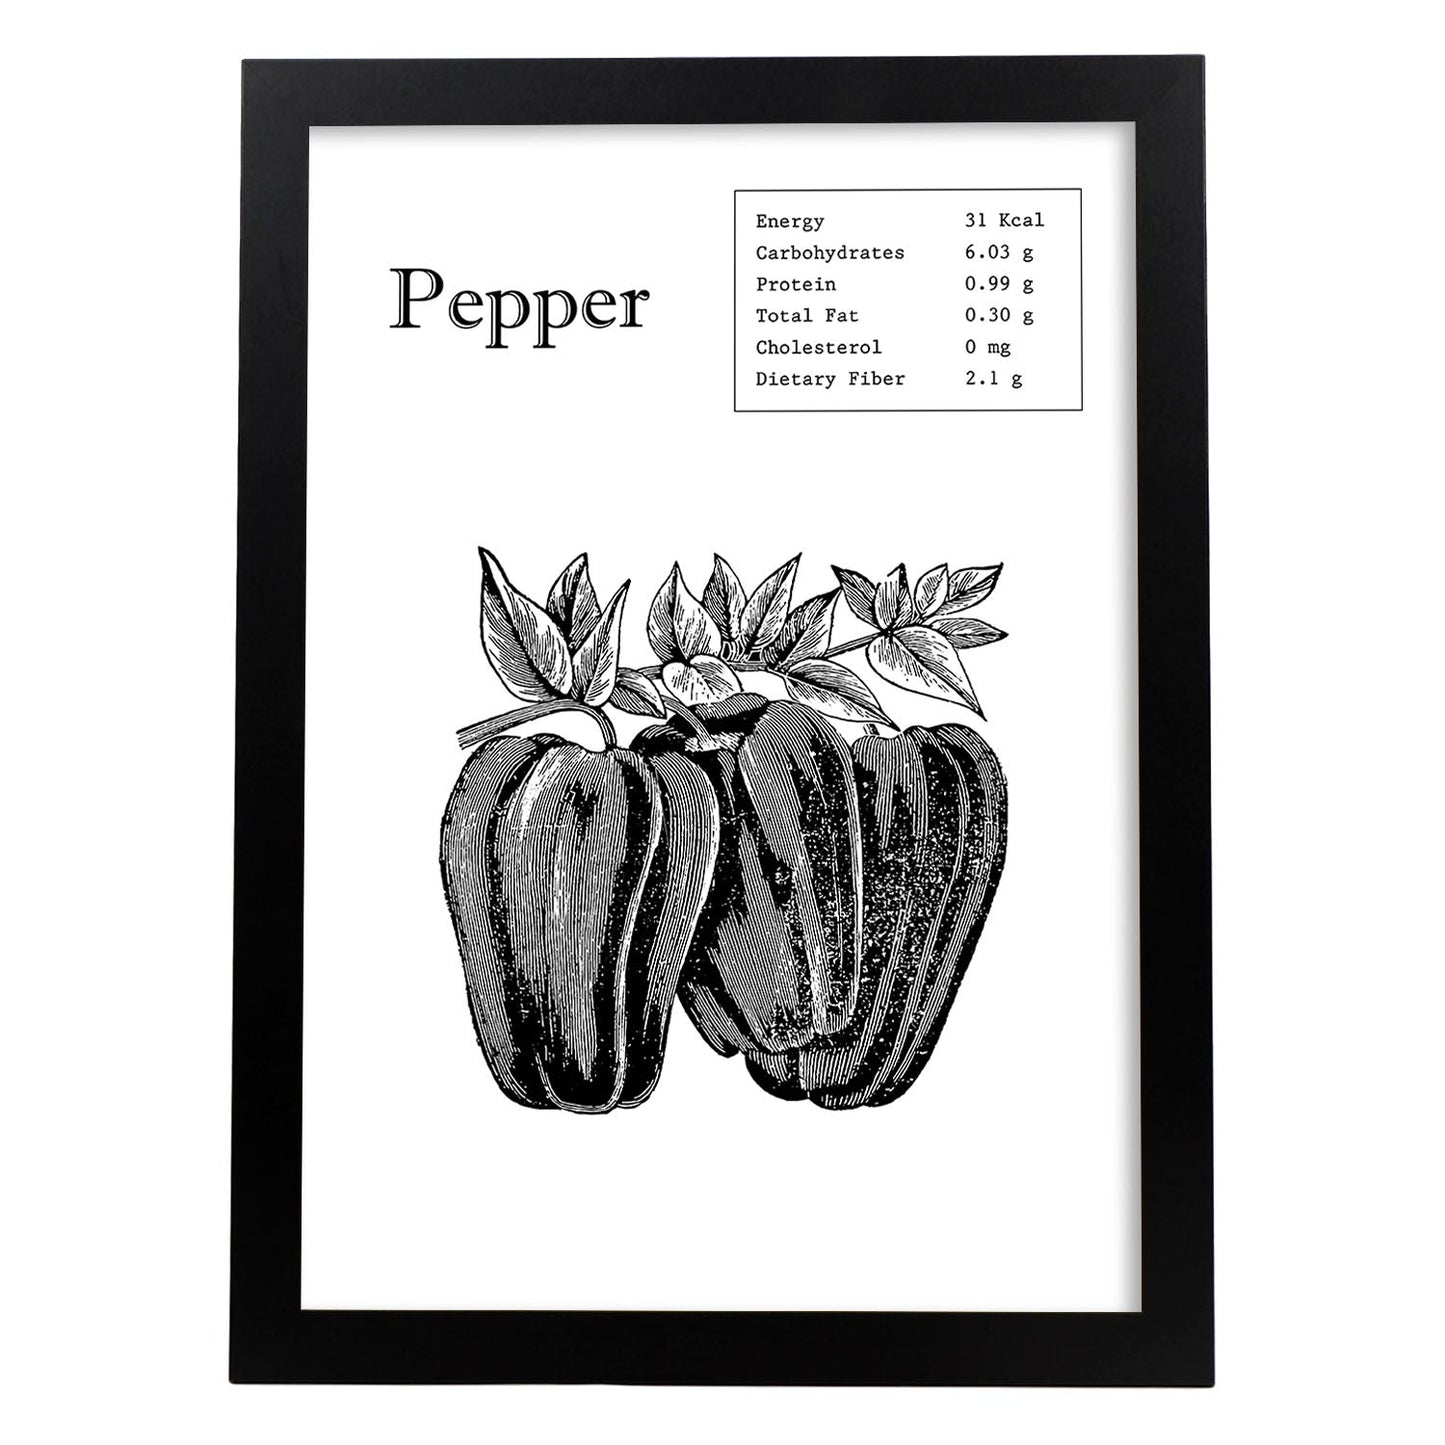 Poster de Pepper. Láminas de frutas y verduras en inglés.-Artwork-Nacnic-A4-Marco Negro-Nacnic Estudio SL